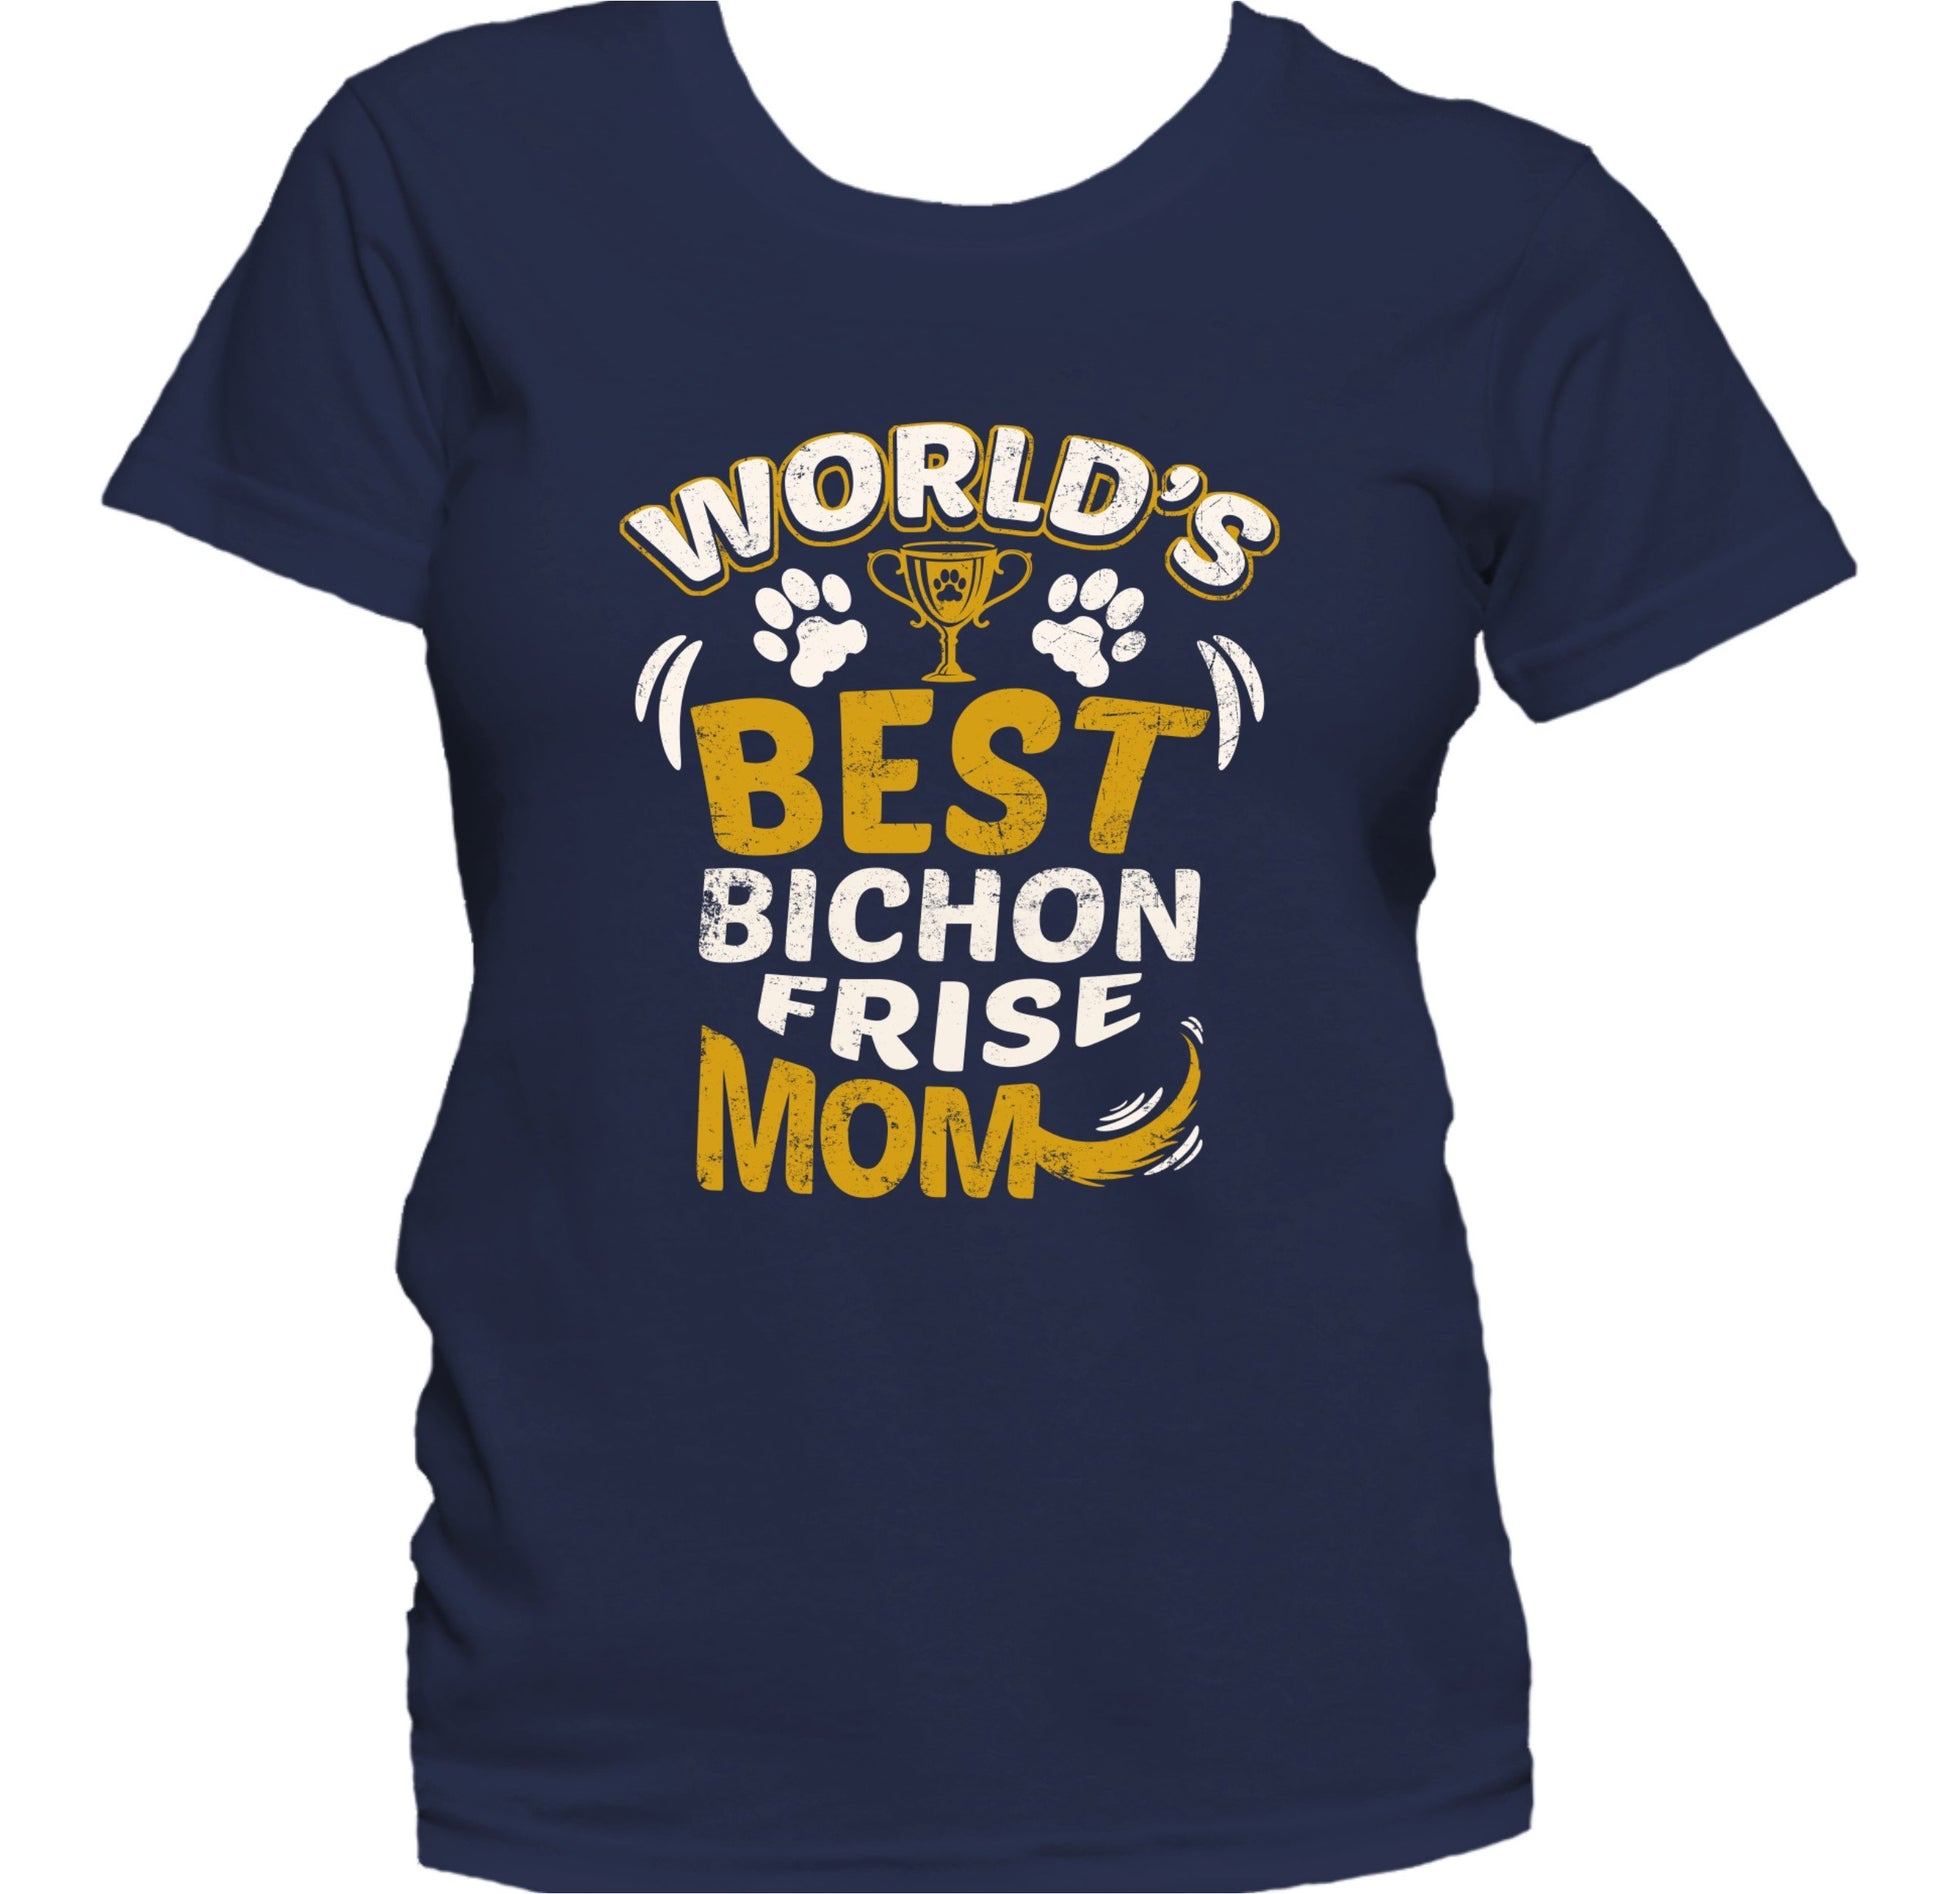 World's Best Bichon Frise Mom Women's T-Shirt